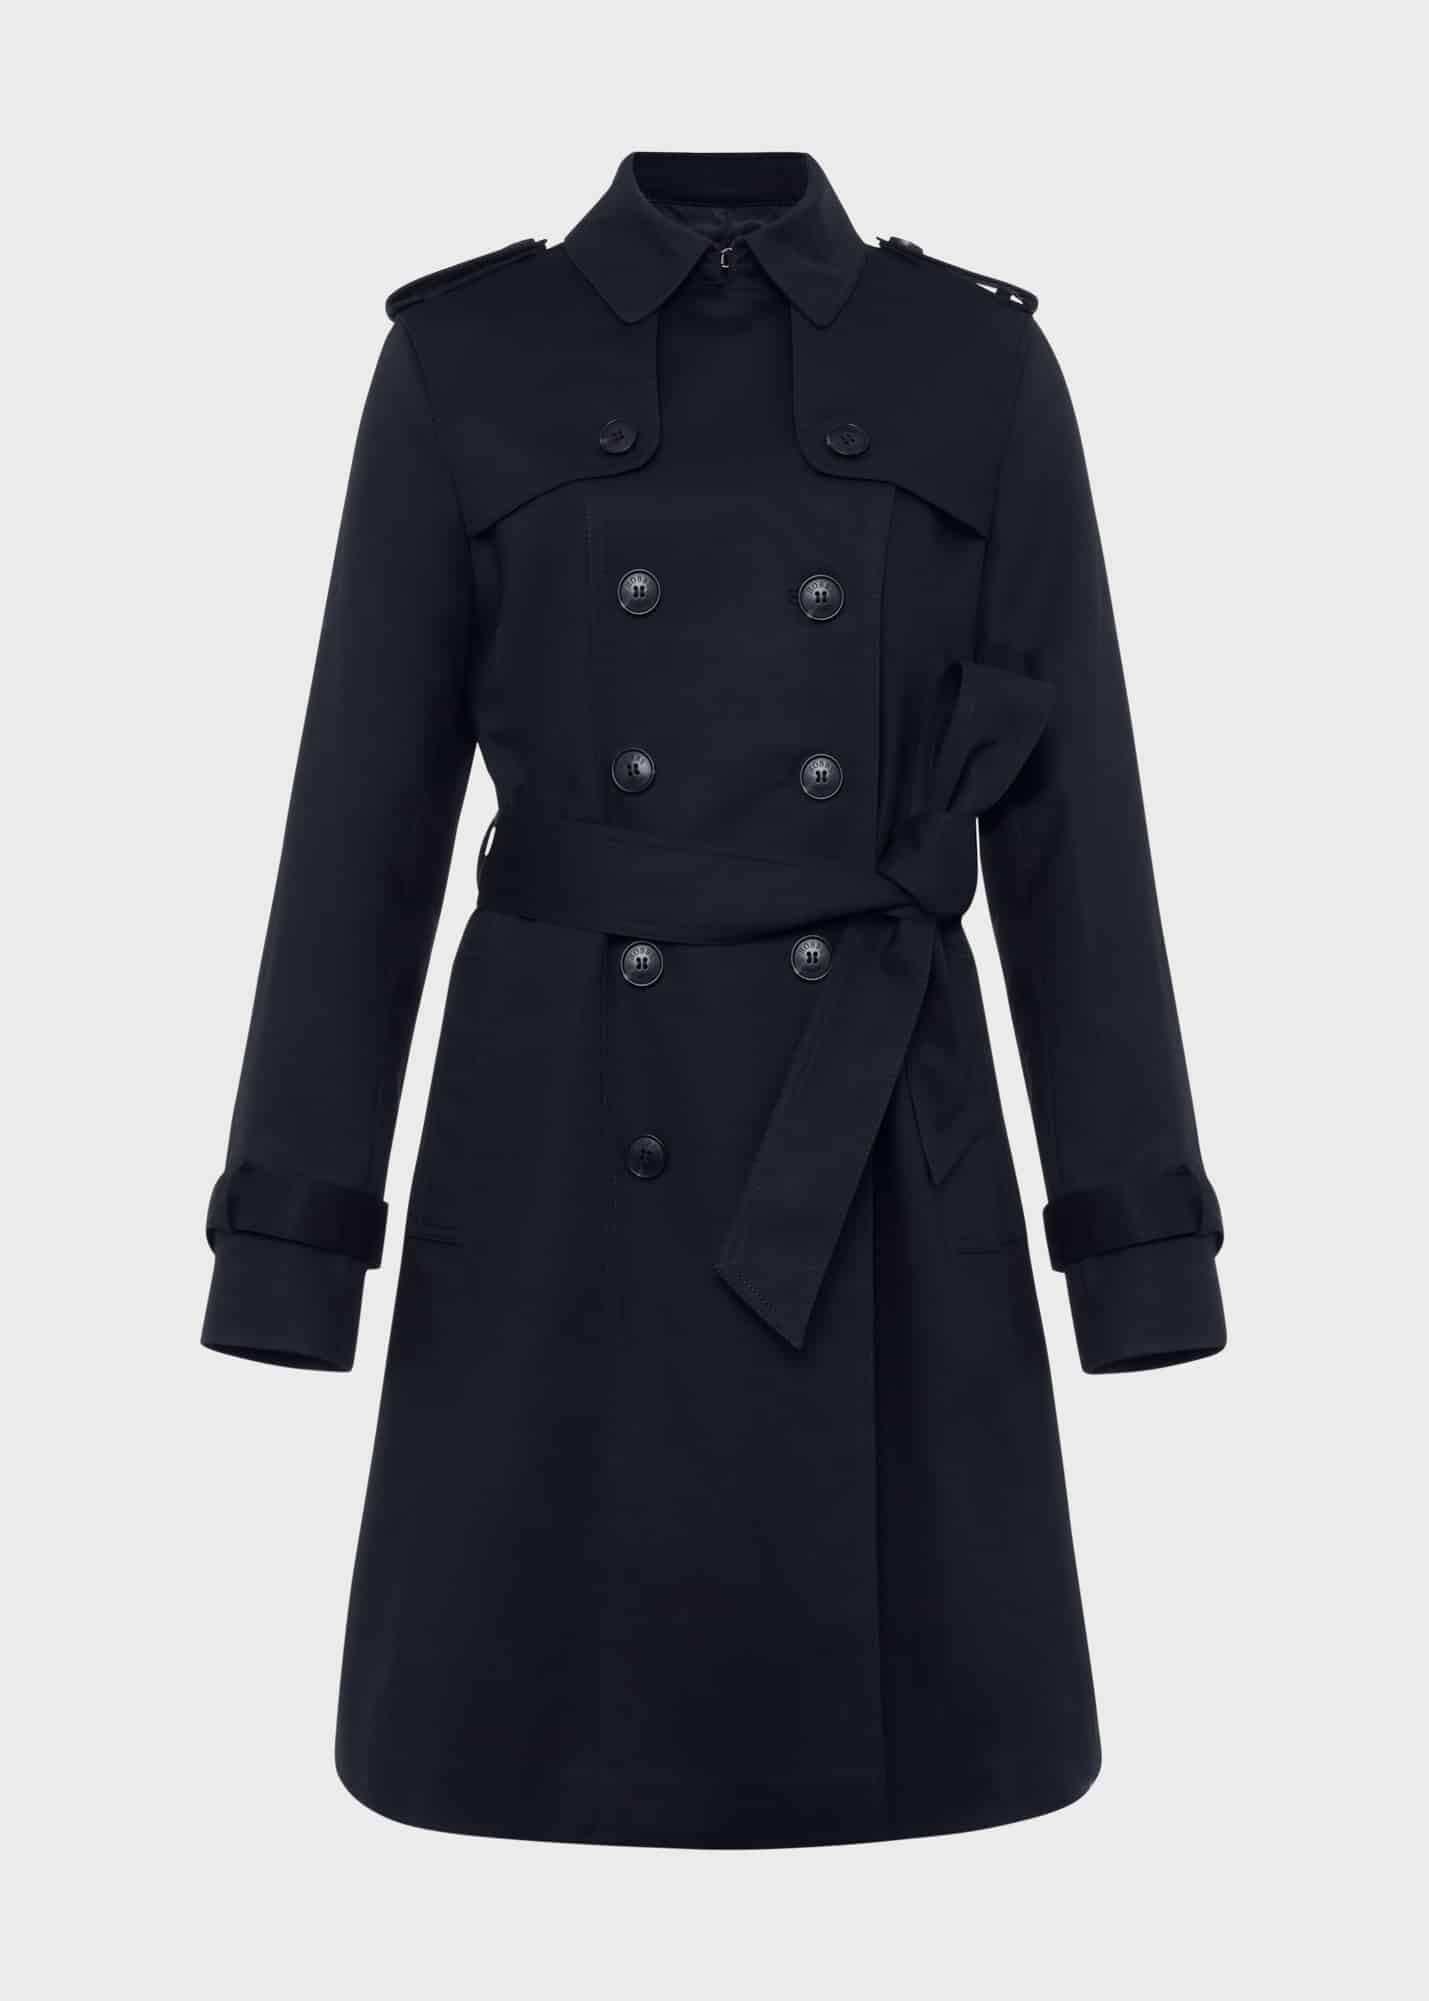 Womens trench coat Ladies Mac Jacket Size 8 10 12 14 16 beige kaki camel 